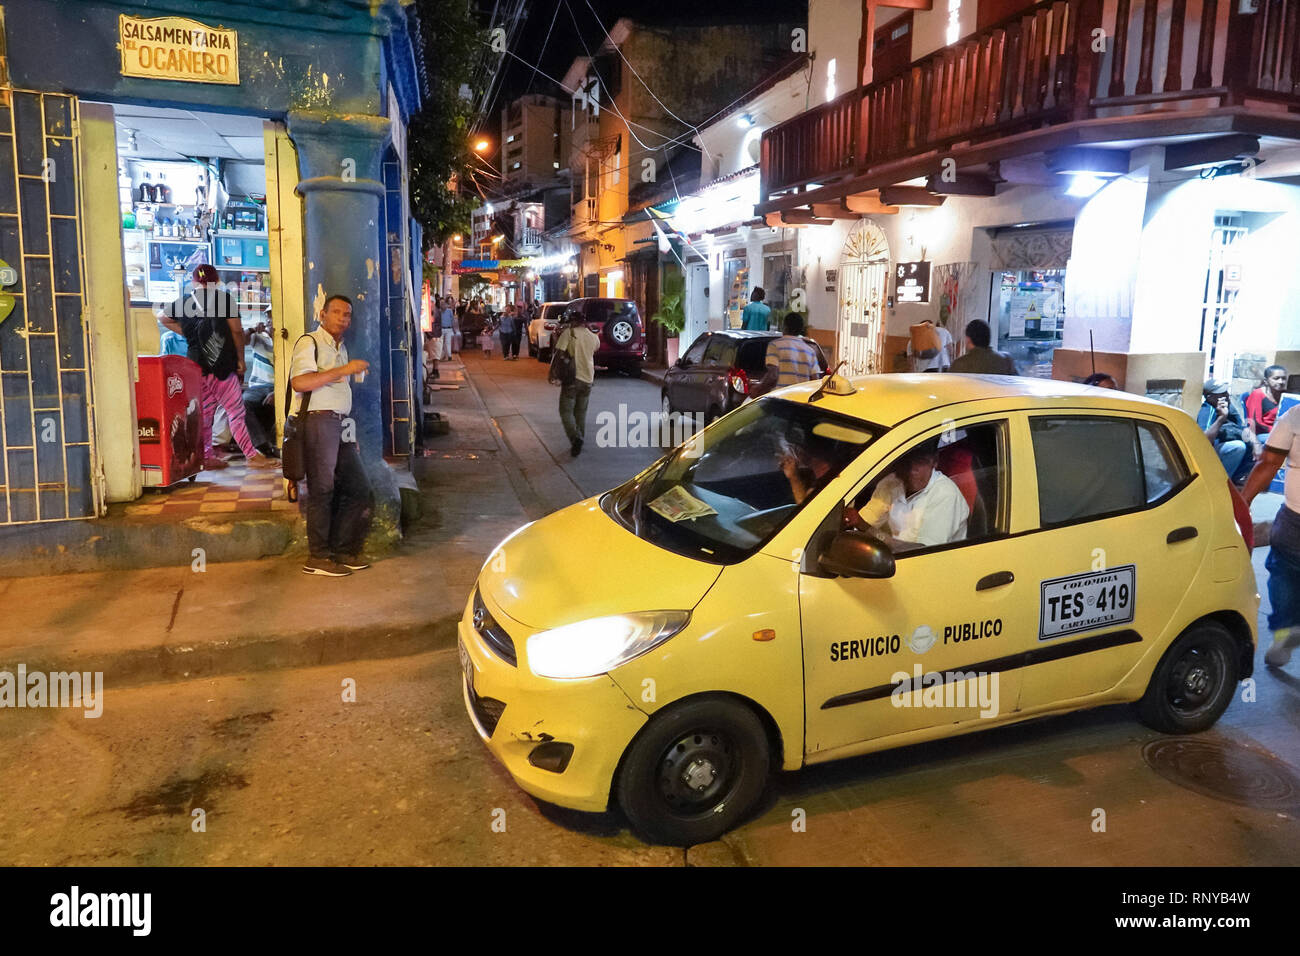 Cartagena Colombia,Center,centre,Getsemani,night evening dusk,Hispanic resident residents,street corner,doorway,car,taxi cab yellow,COL190118065 Stock Photo